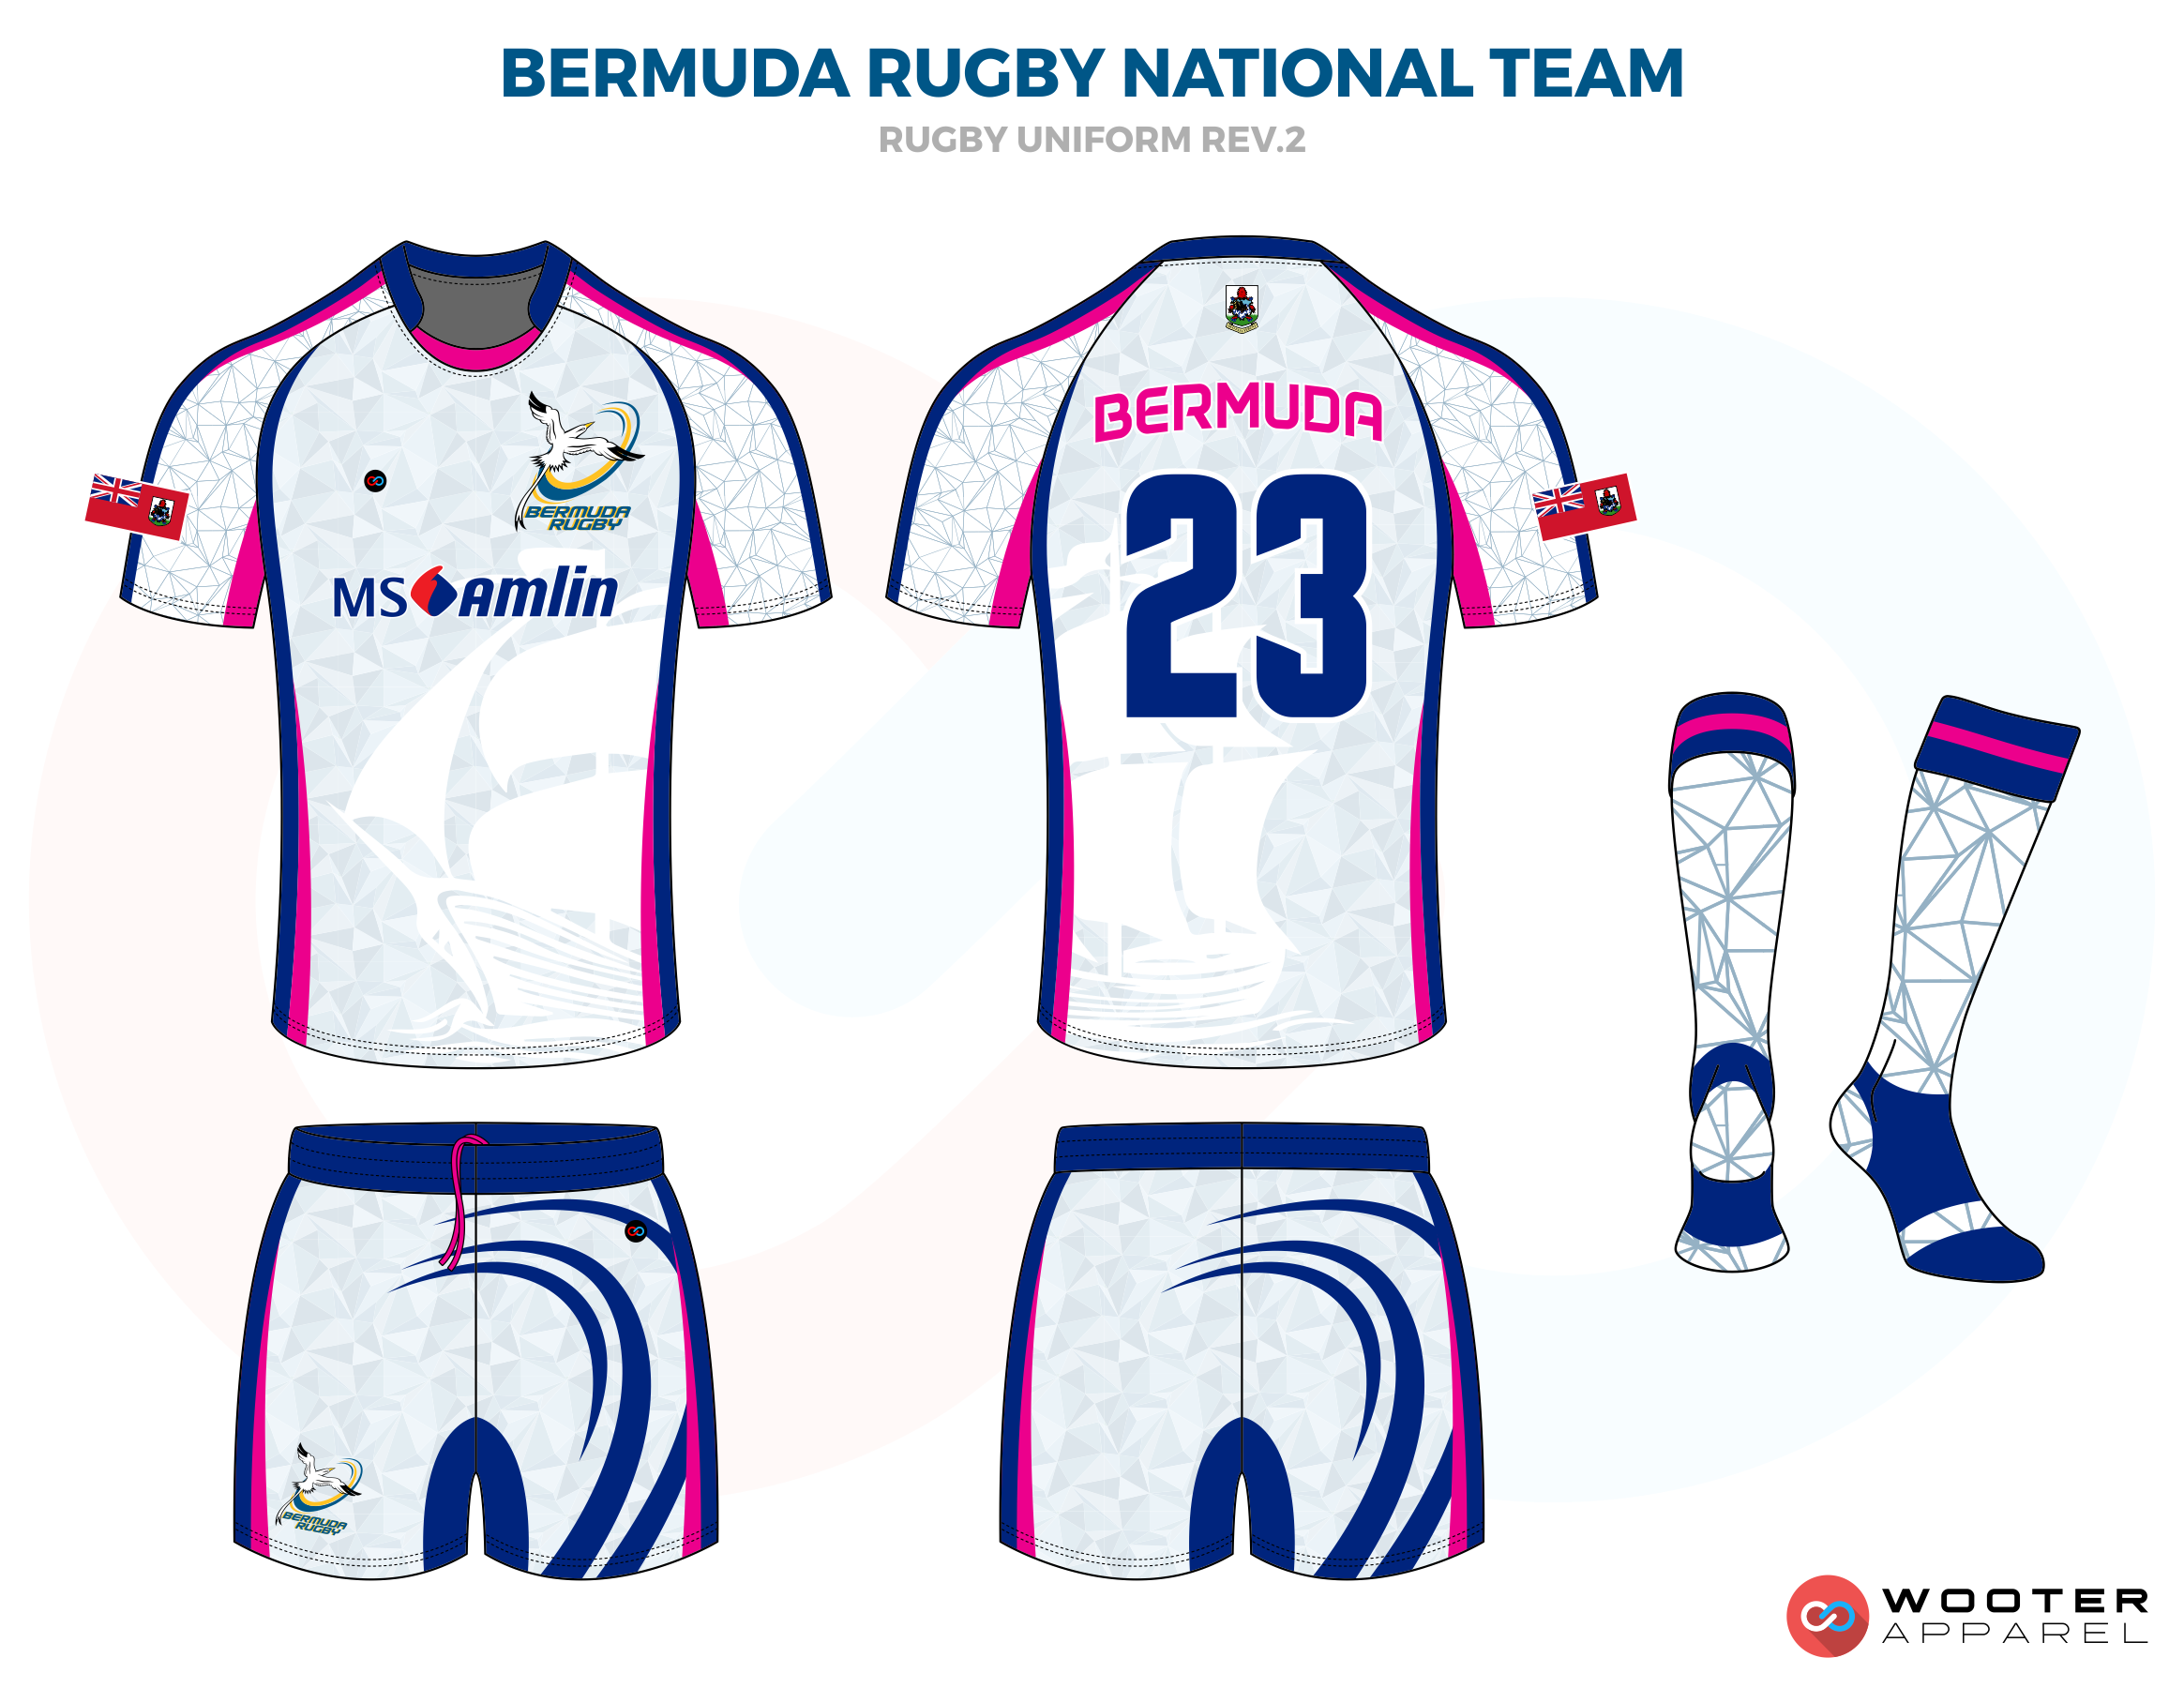 rugby team uniforms